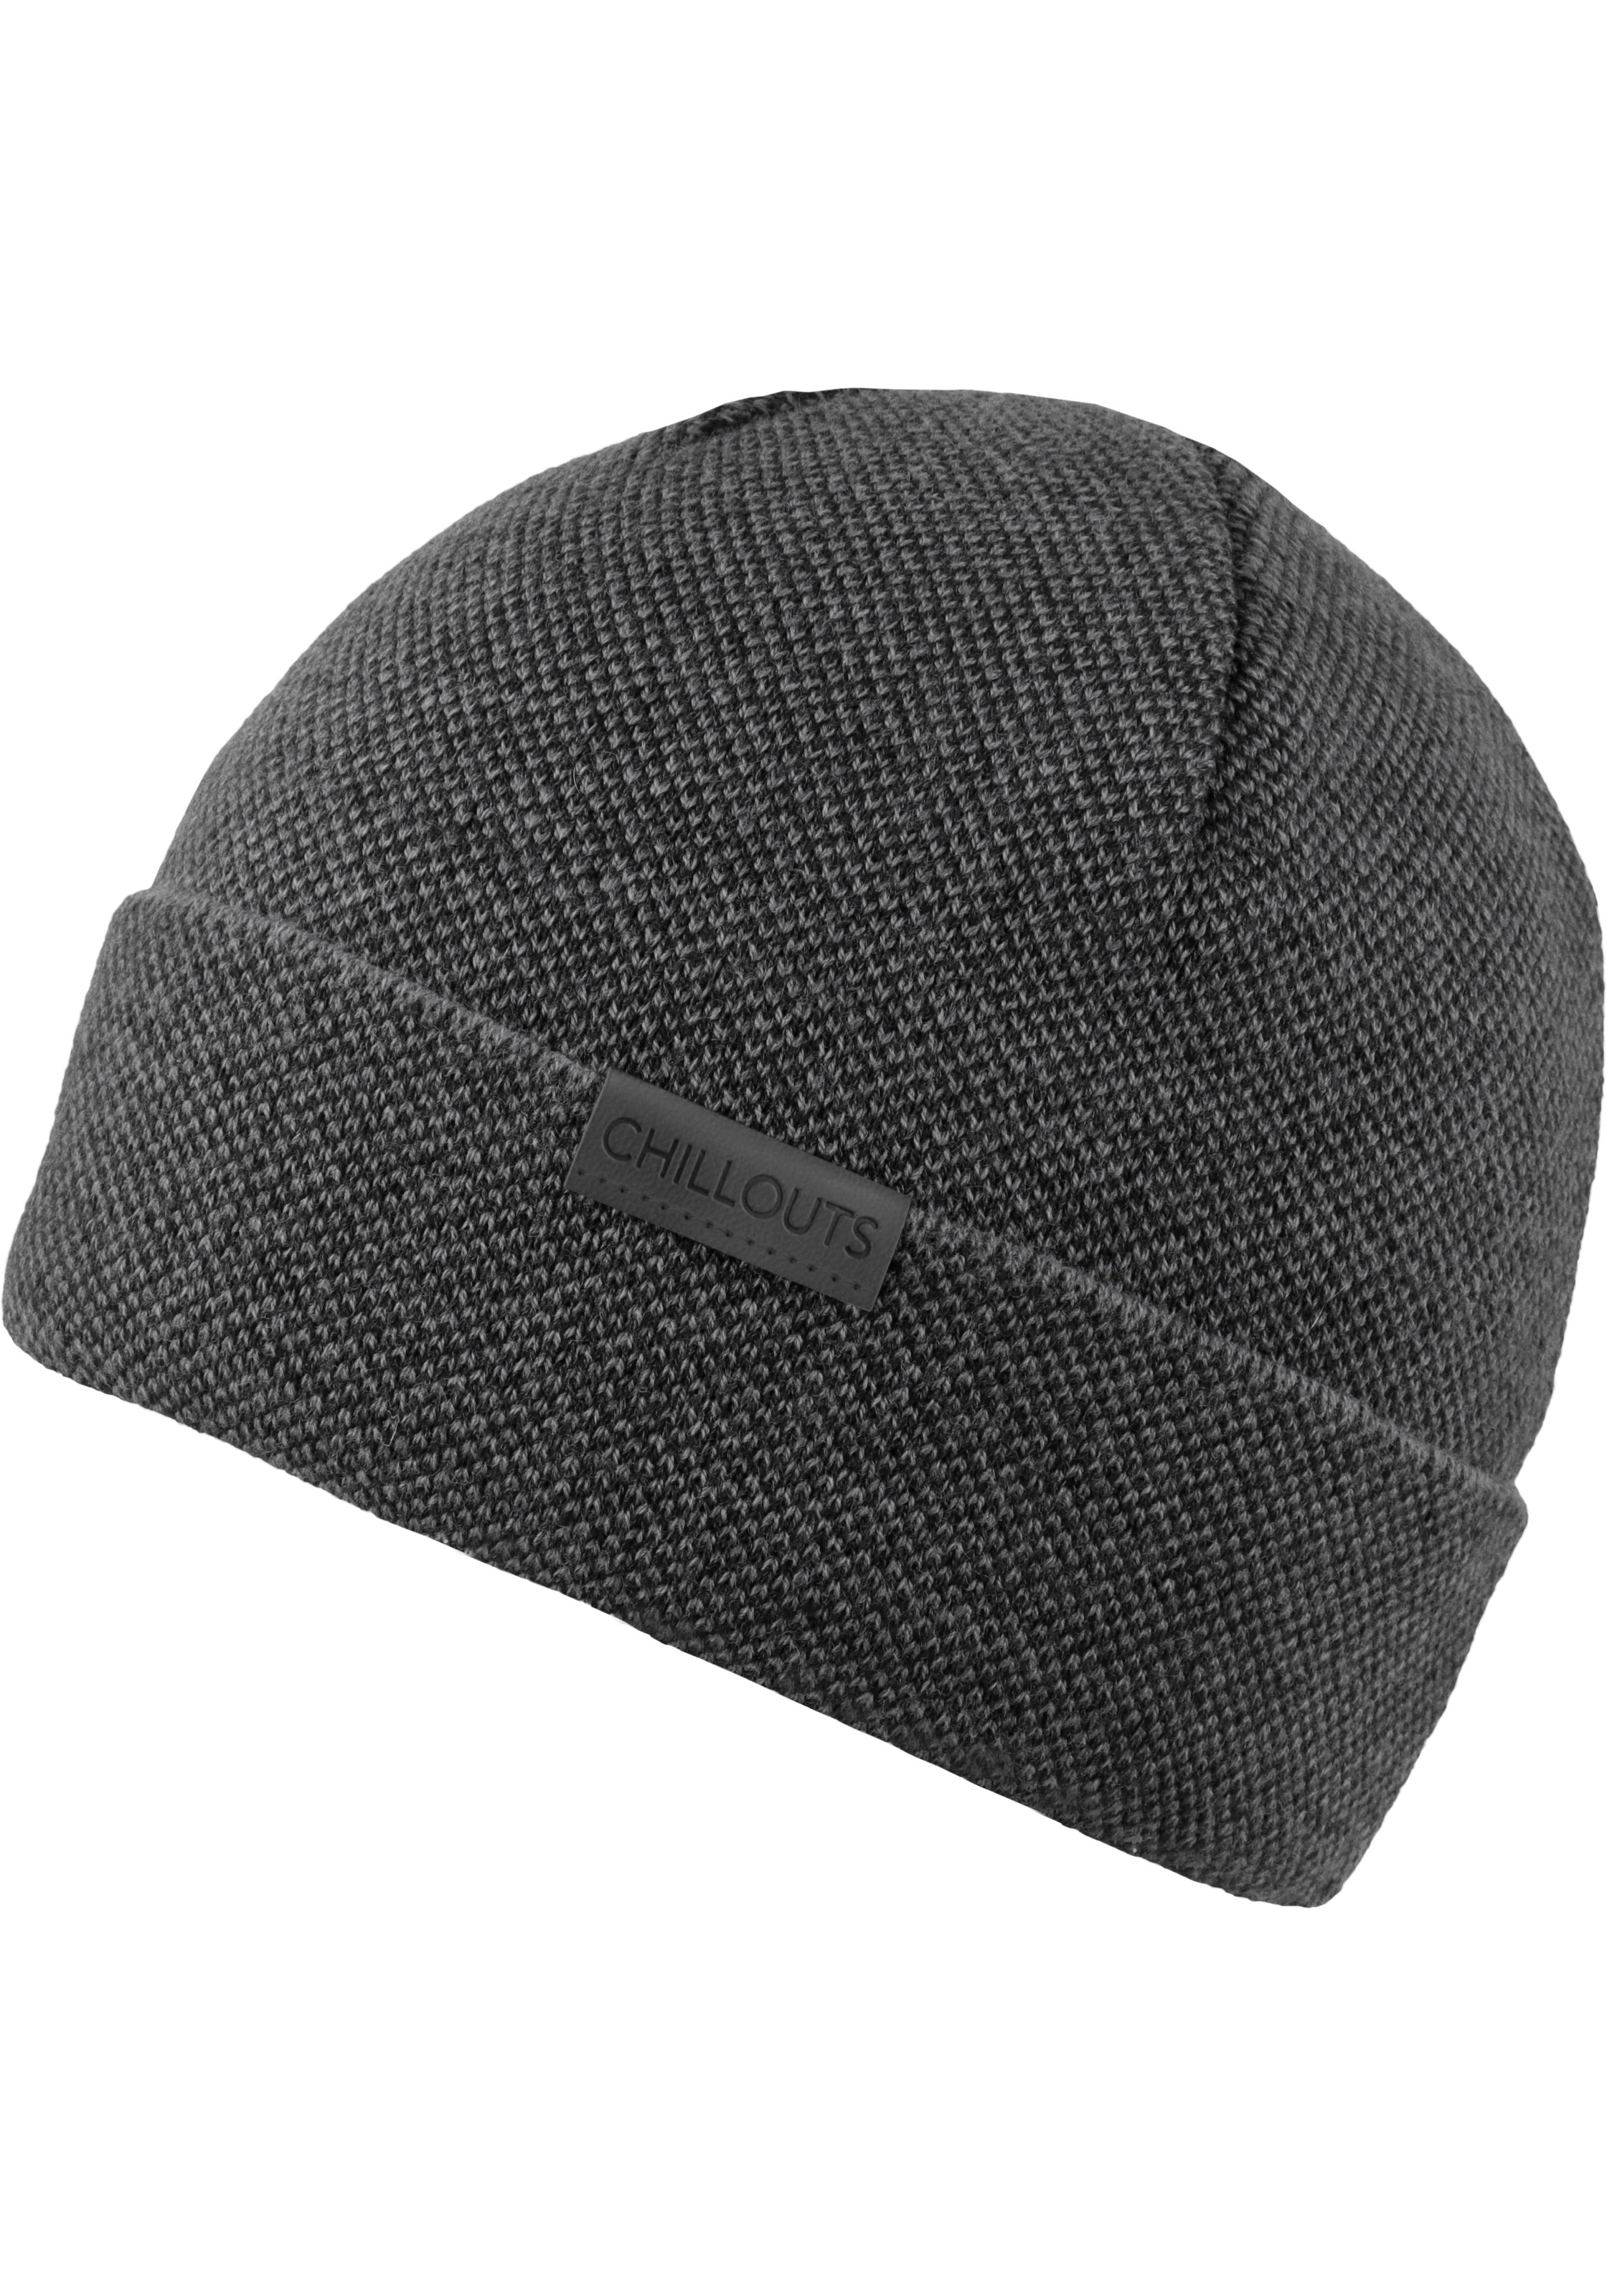 chillouts Strickmütze »Kilian Hat« online shoppen bei OTTO